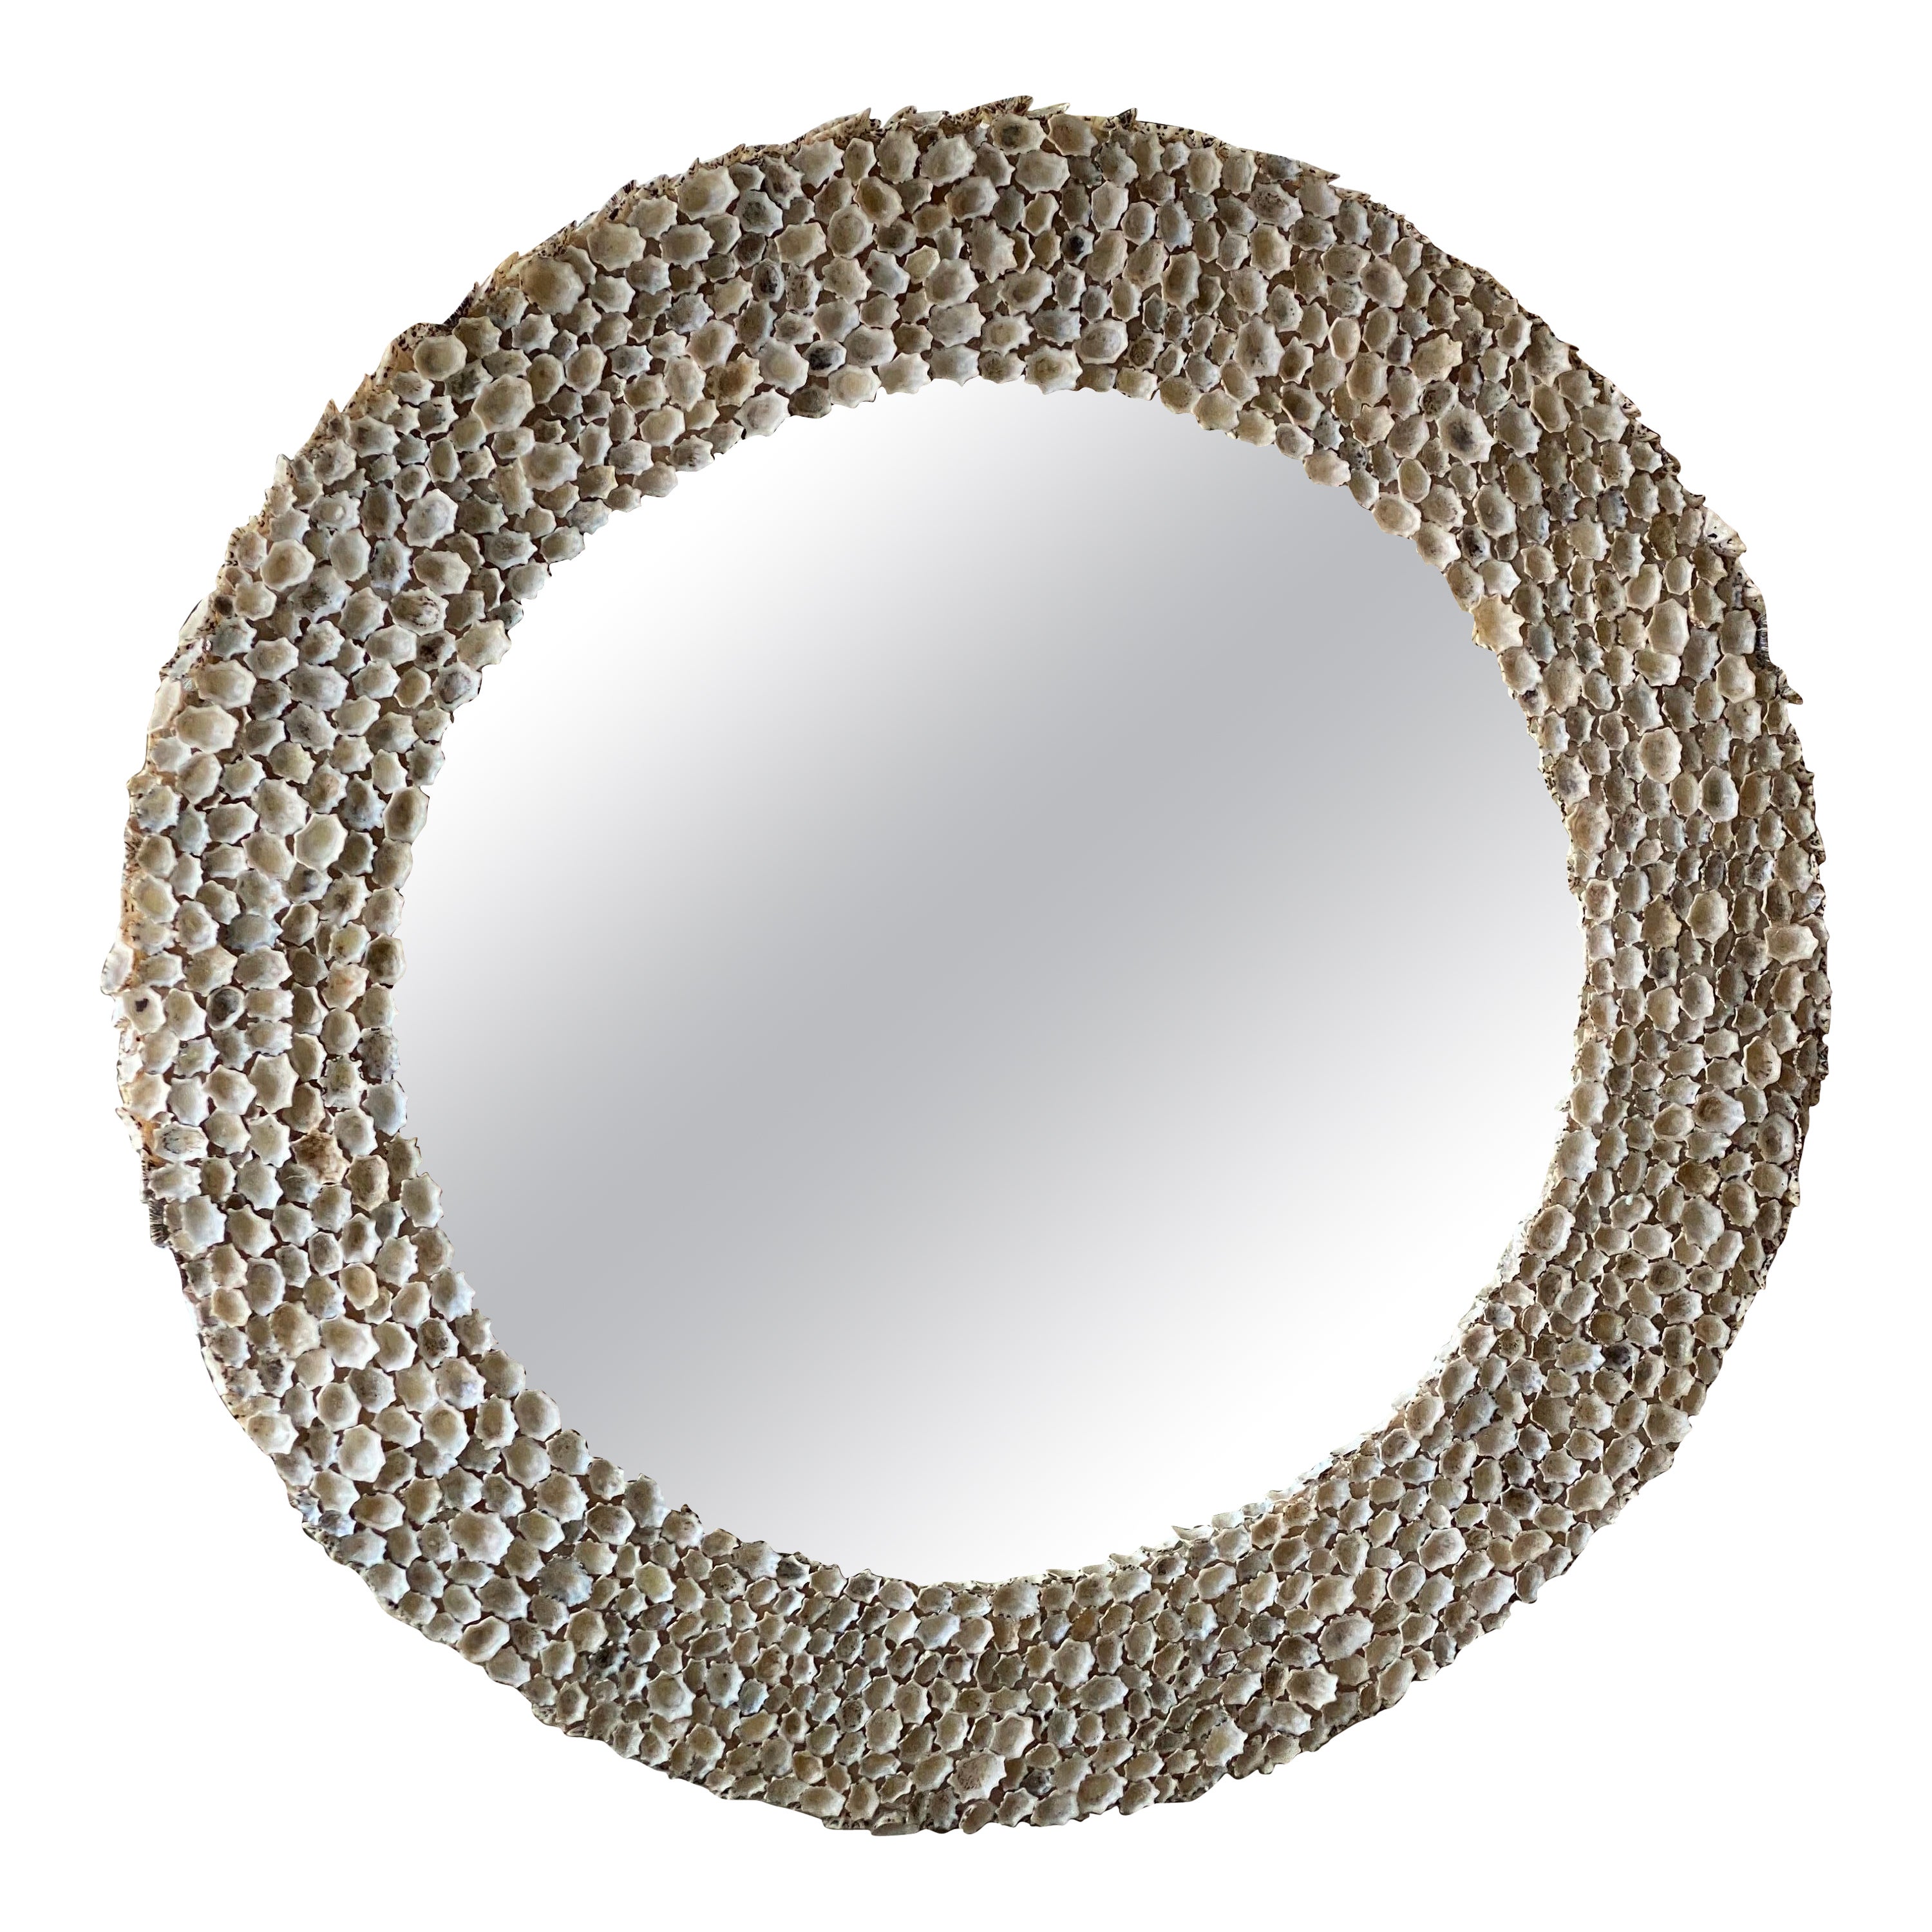 Vintage Seashell Shell Encrusted Round Circular Palm Beach Wall Mirror For Sale